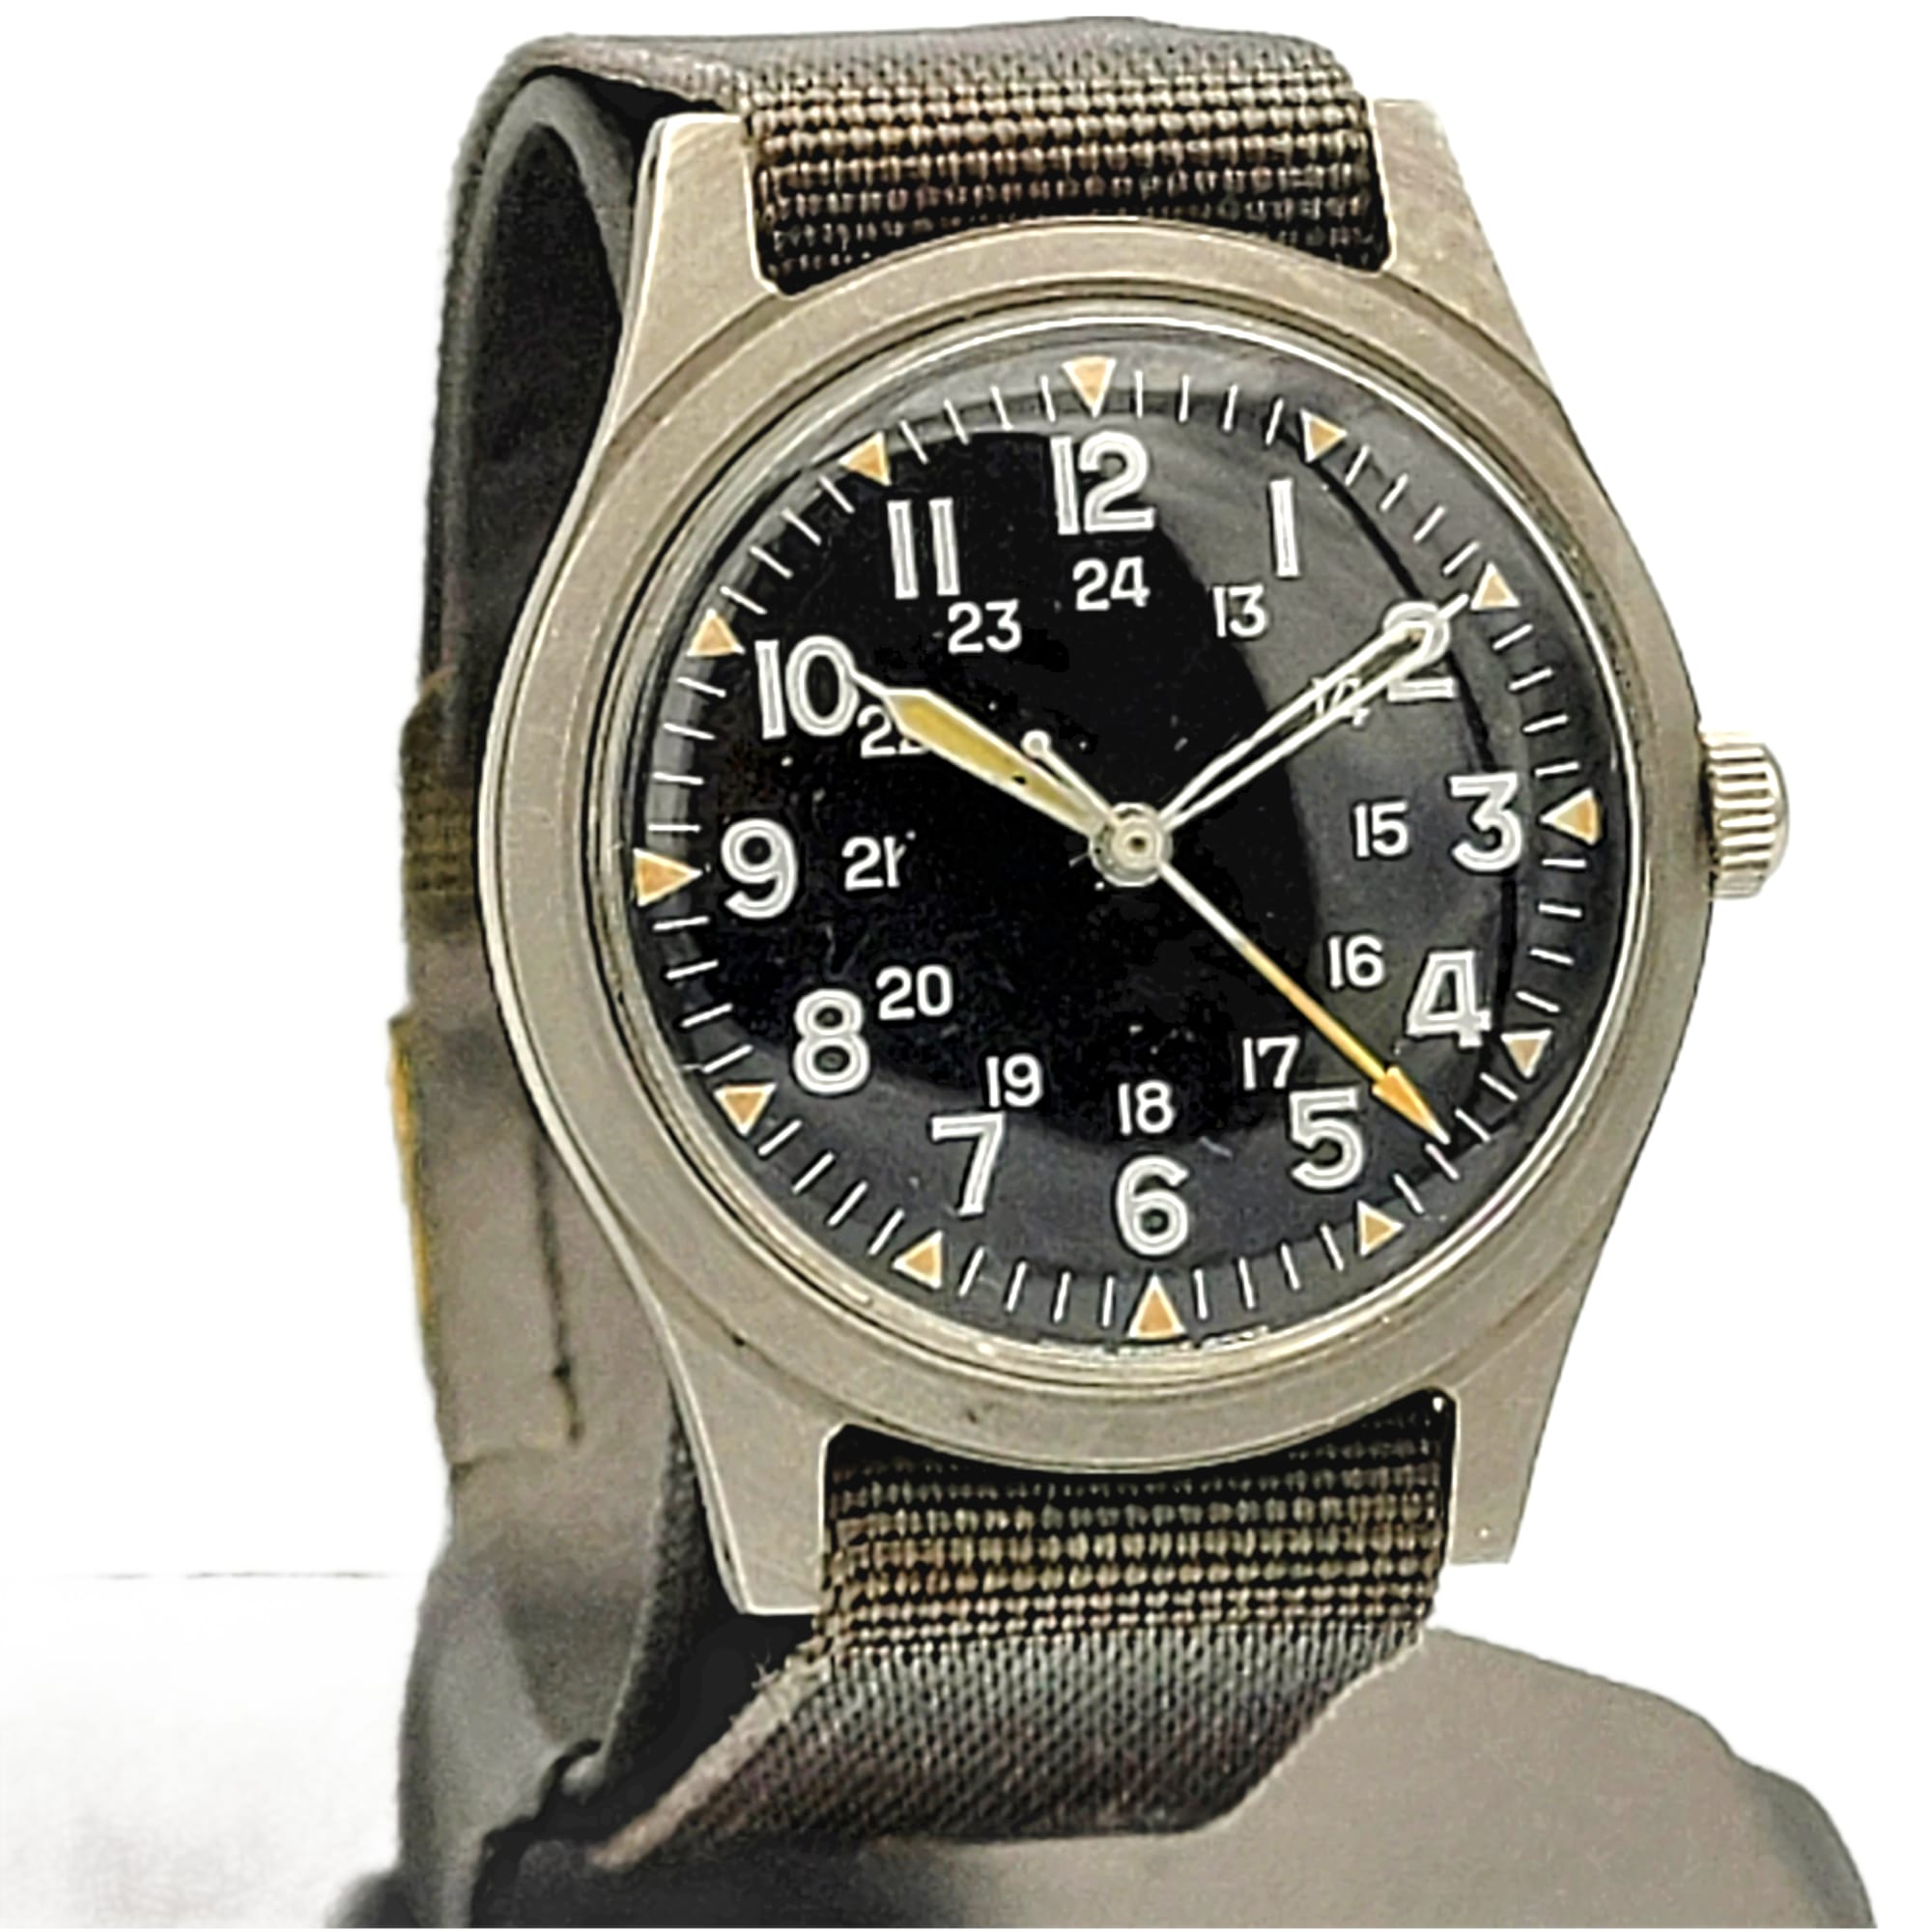 1974 Benrus GG-W-113 U.S. Military Pilots Wrist Watch Vietnam War